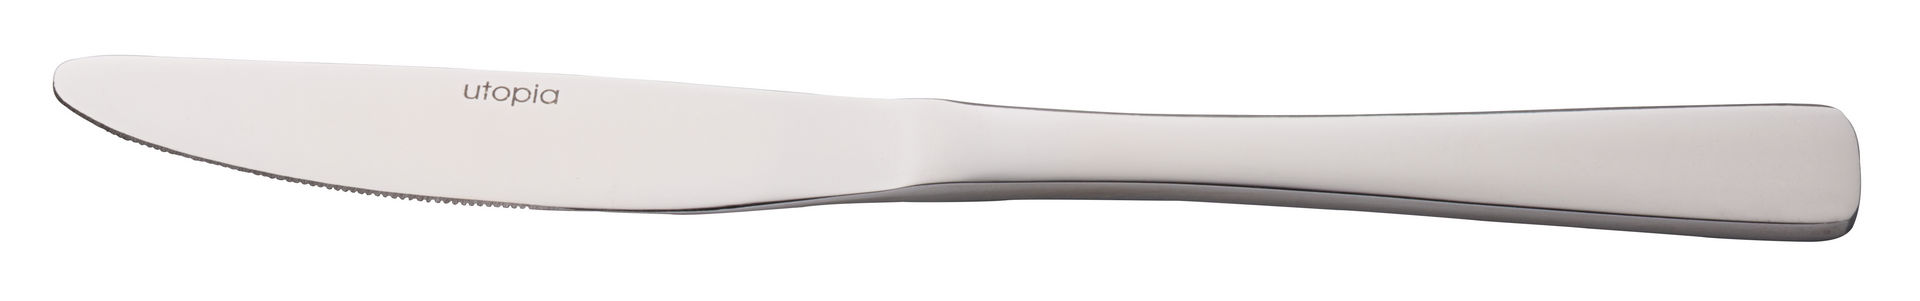 Elegance Table Knife - F10102-000000-B01012 (Pack of 12)